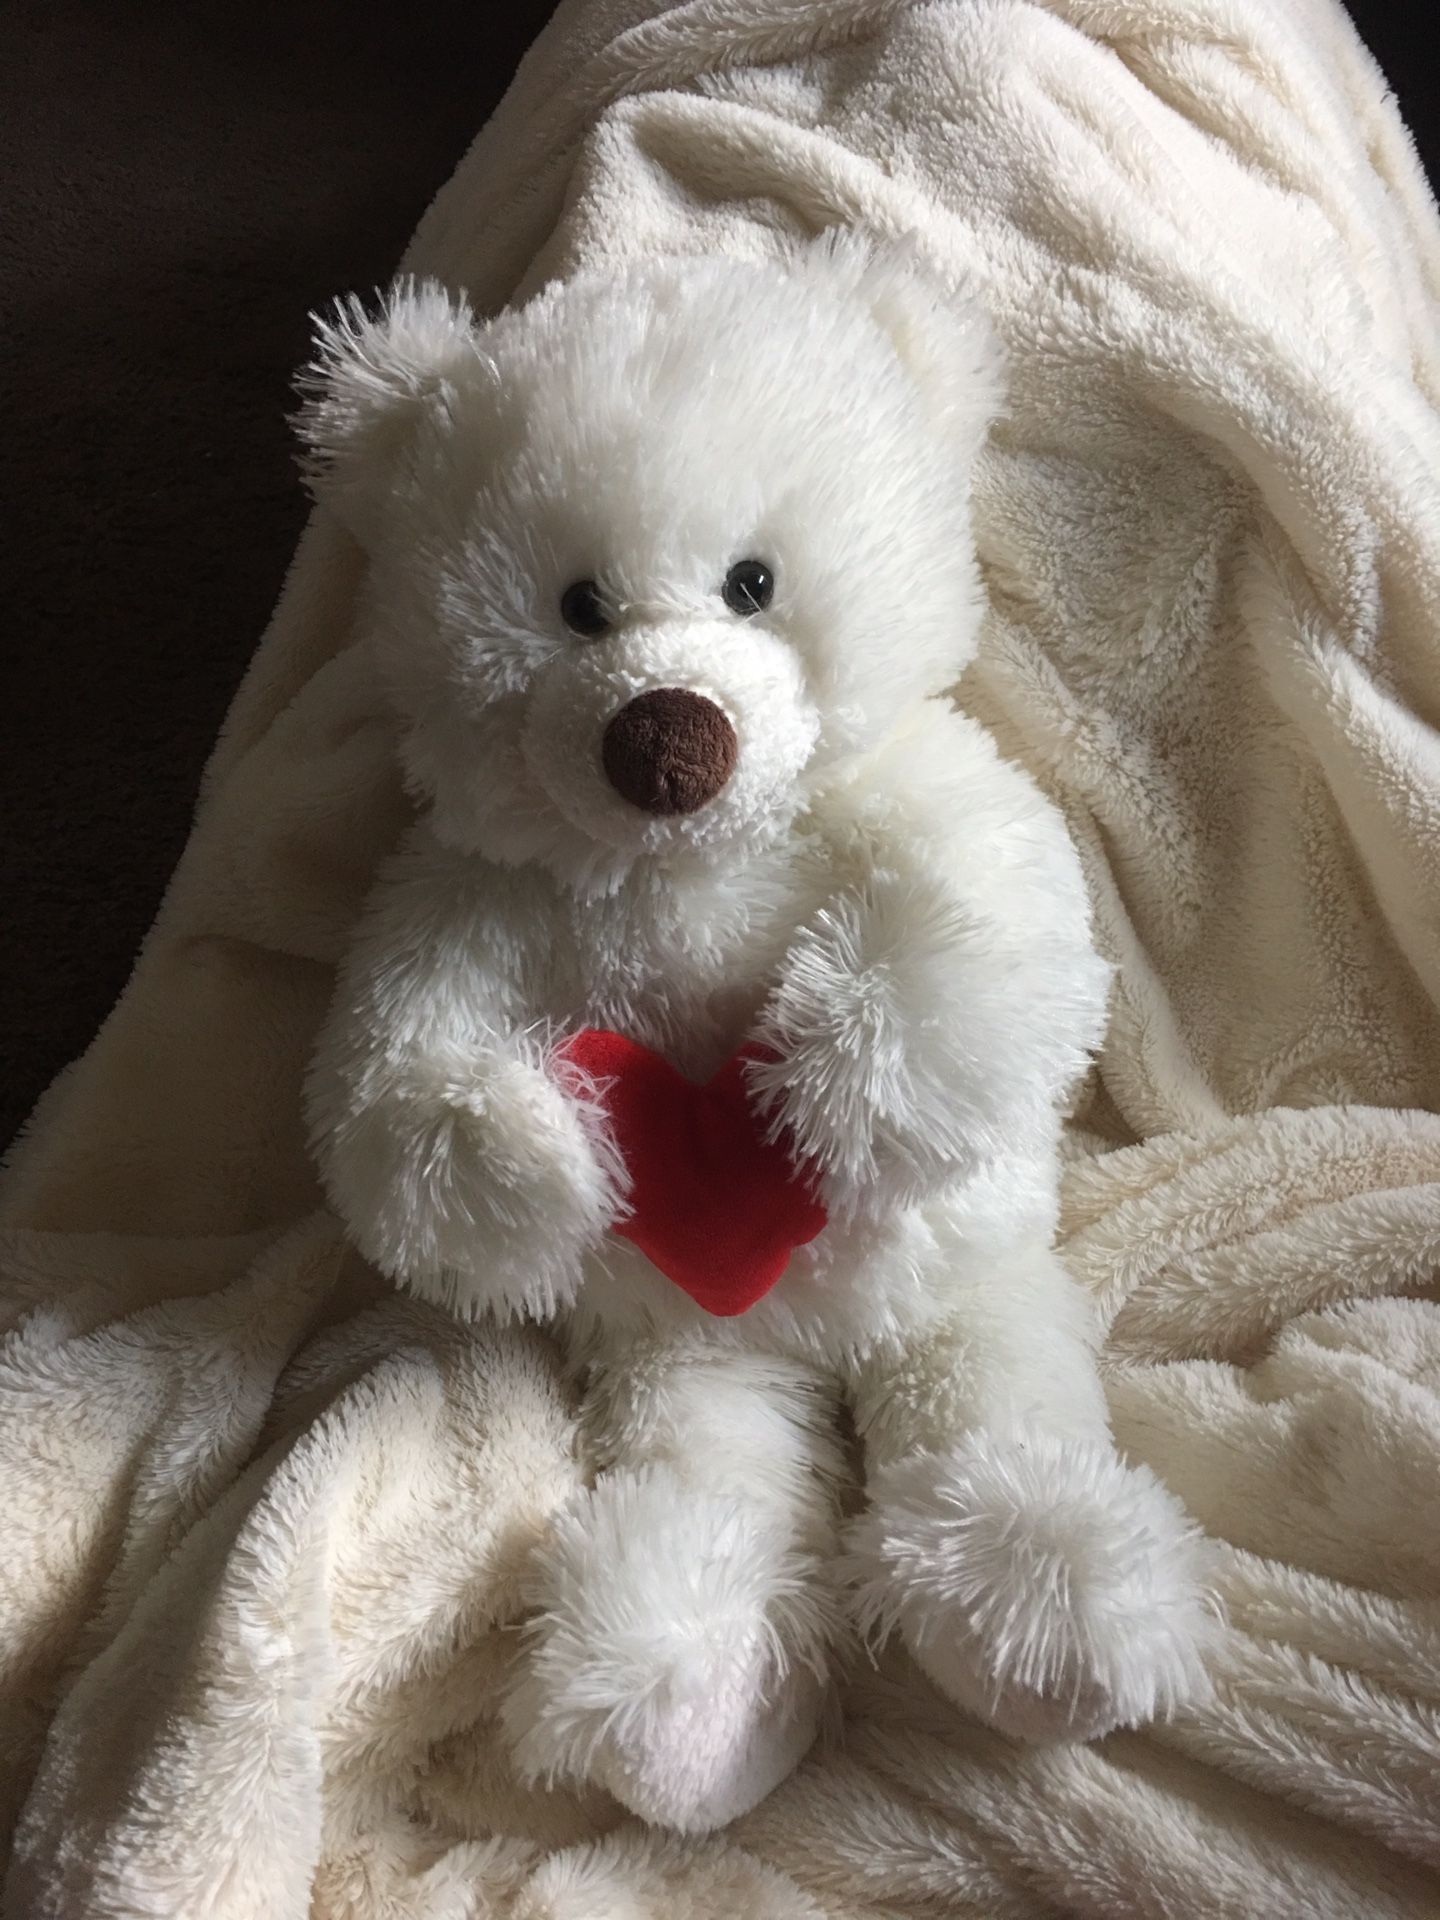 16 inch white teddy bear holding a heart stuffed animal.